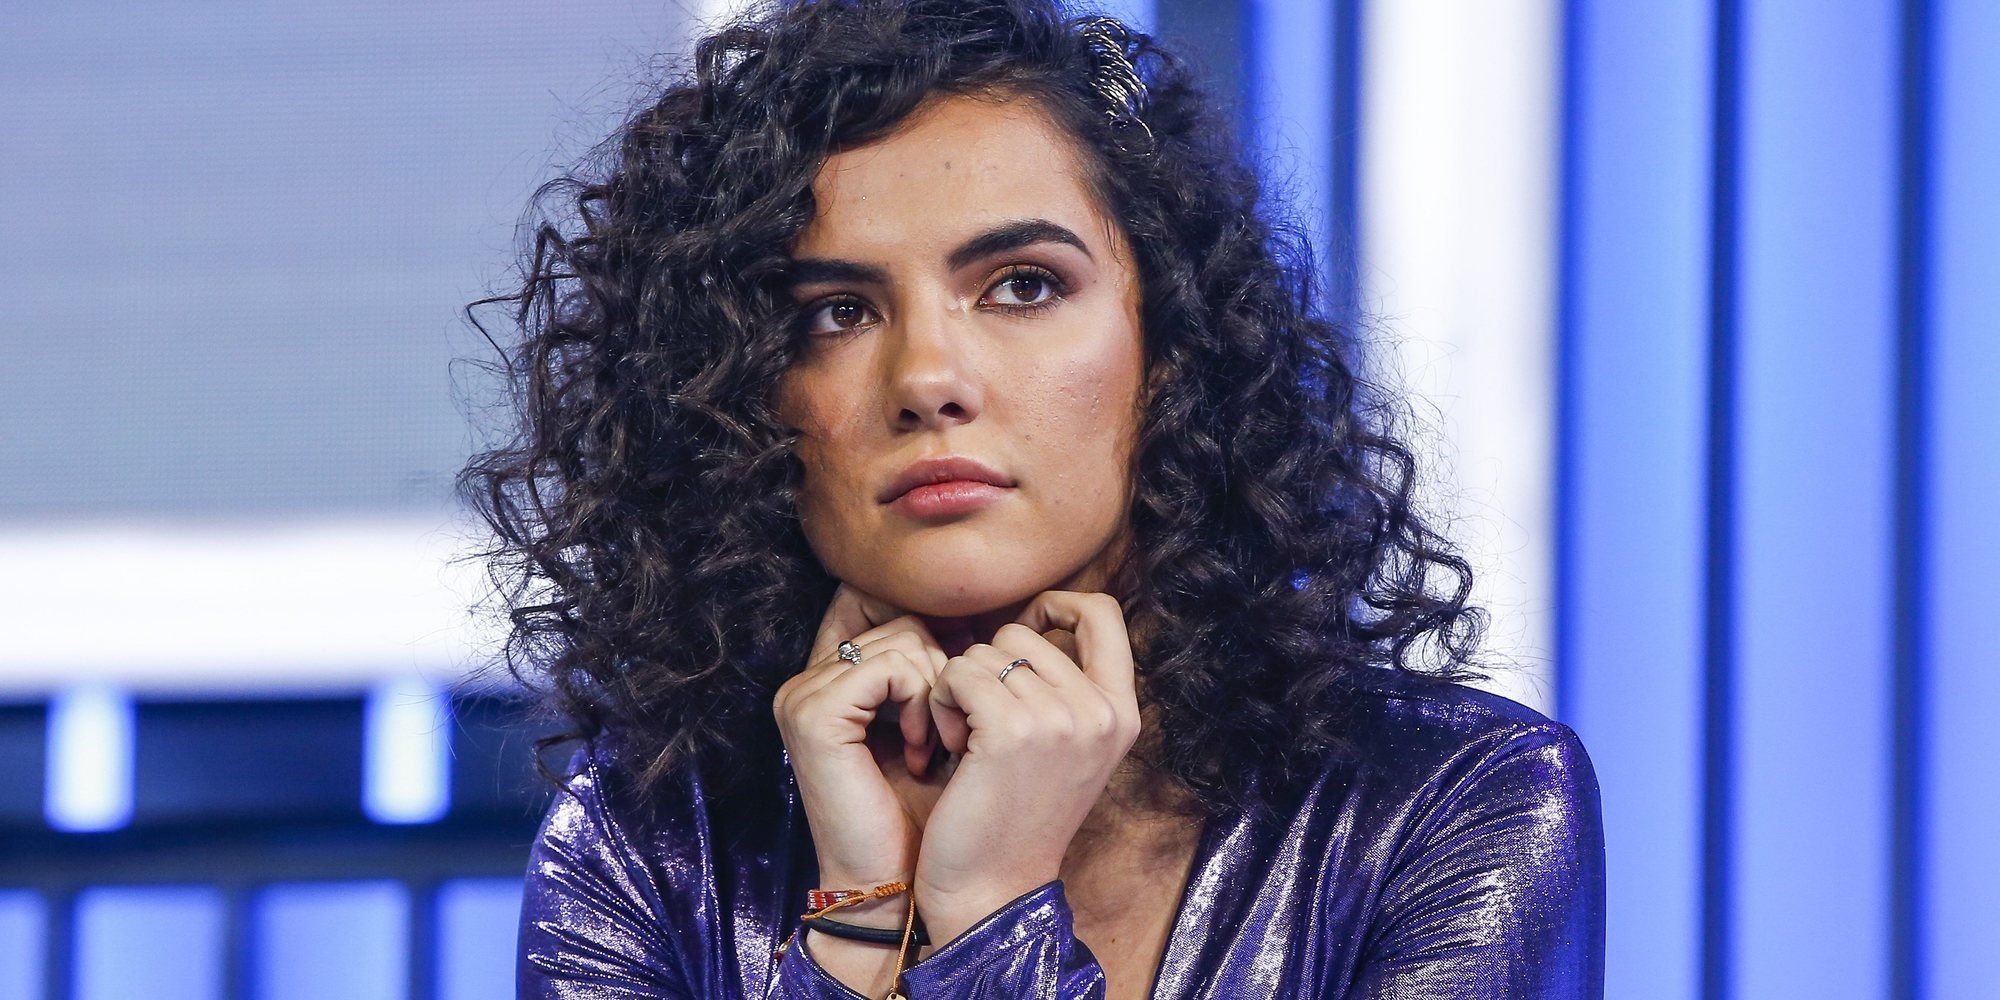 Marta Sango ('OT 2018') interpretará a Susana Romero en el musical de 'La llamada'